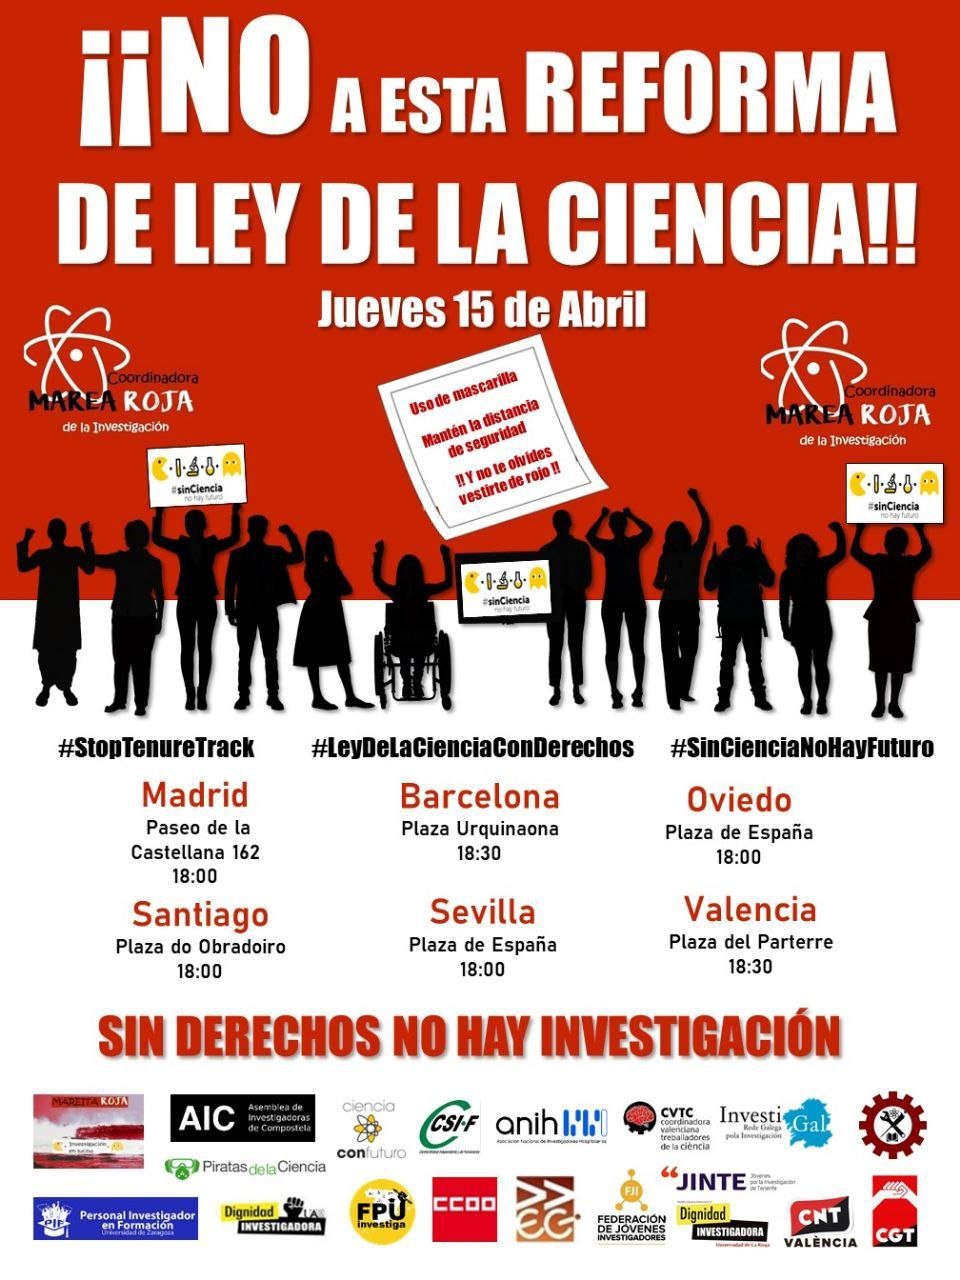 https://ccoo.upv.es/images/stories/2021-04-15_Investigadores/como-te-afecta-ley-ciencia-09-cartel-convocantes.jpg